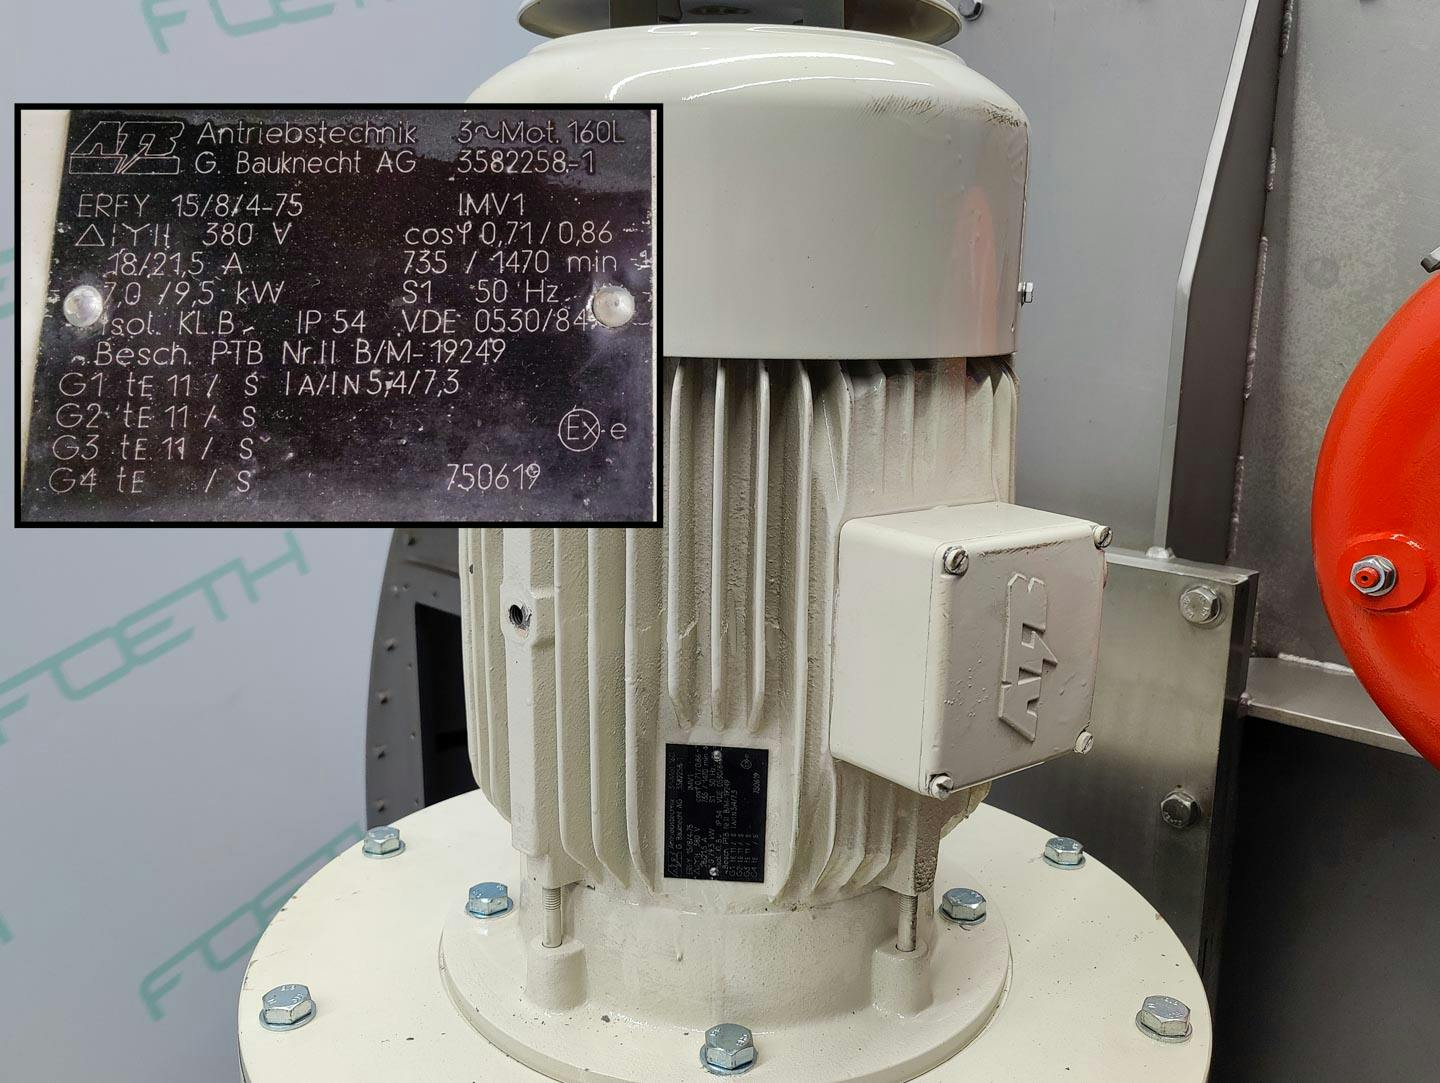 Hosokawa Vrieco 35 RV-3 - Conical mixer - image 11